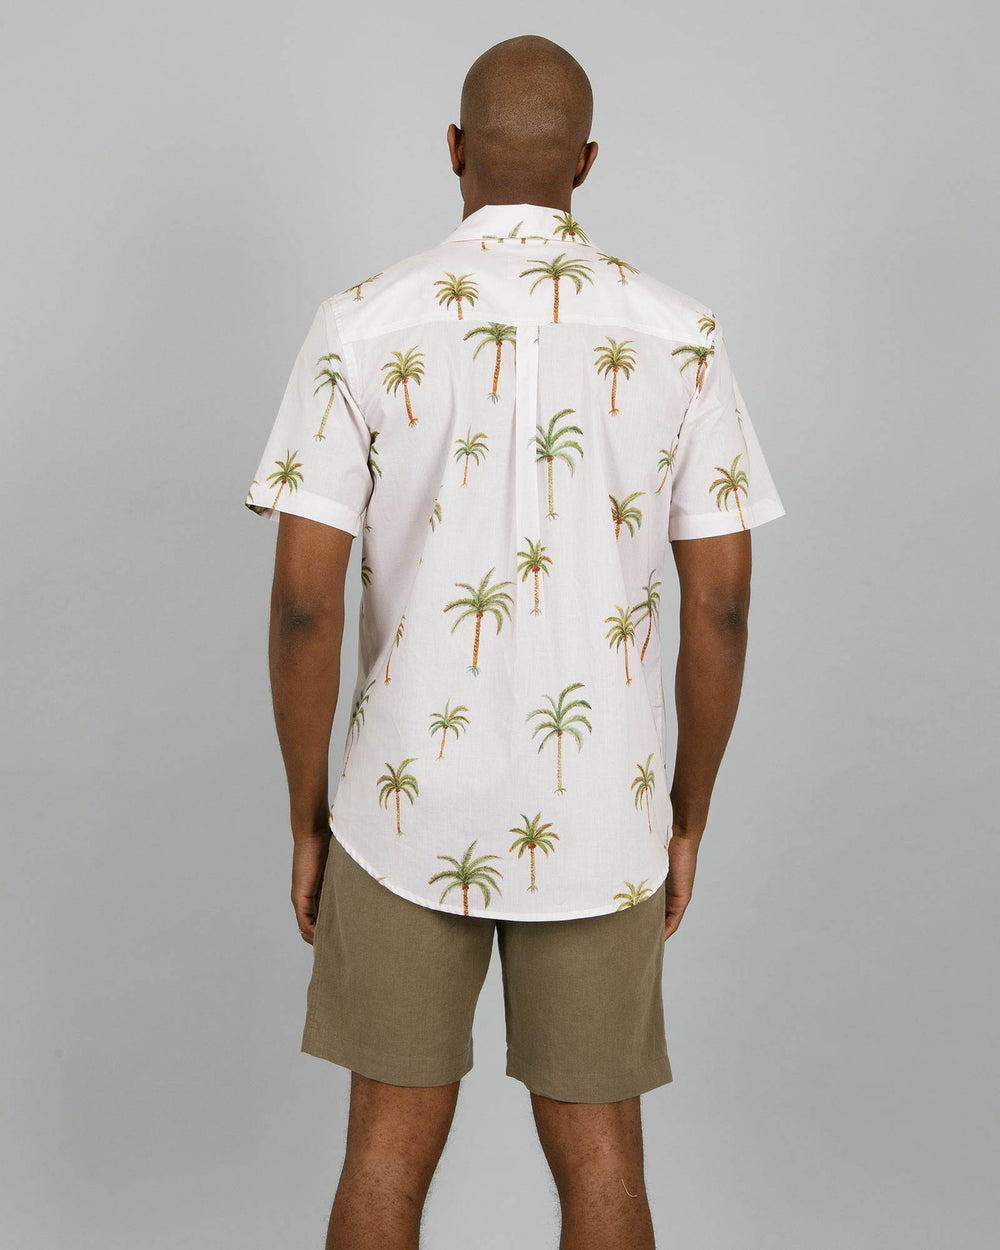 Mens summer shirt - palm beach